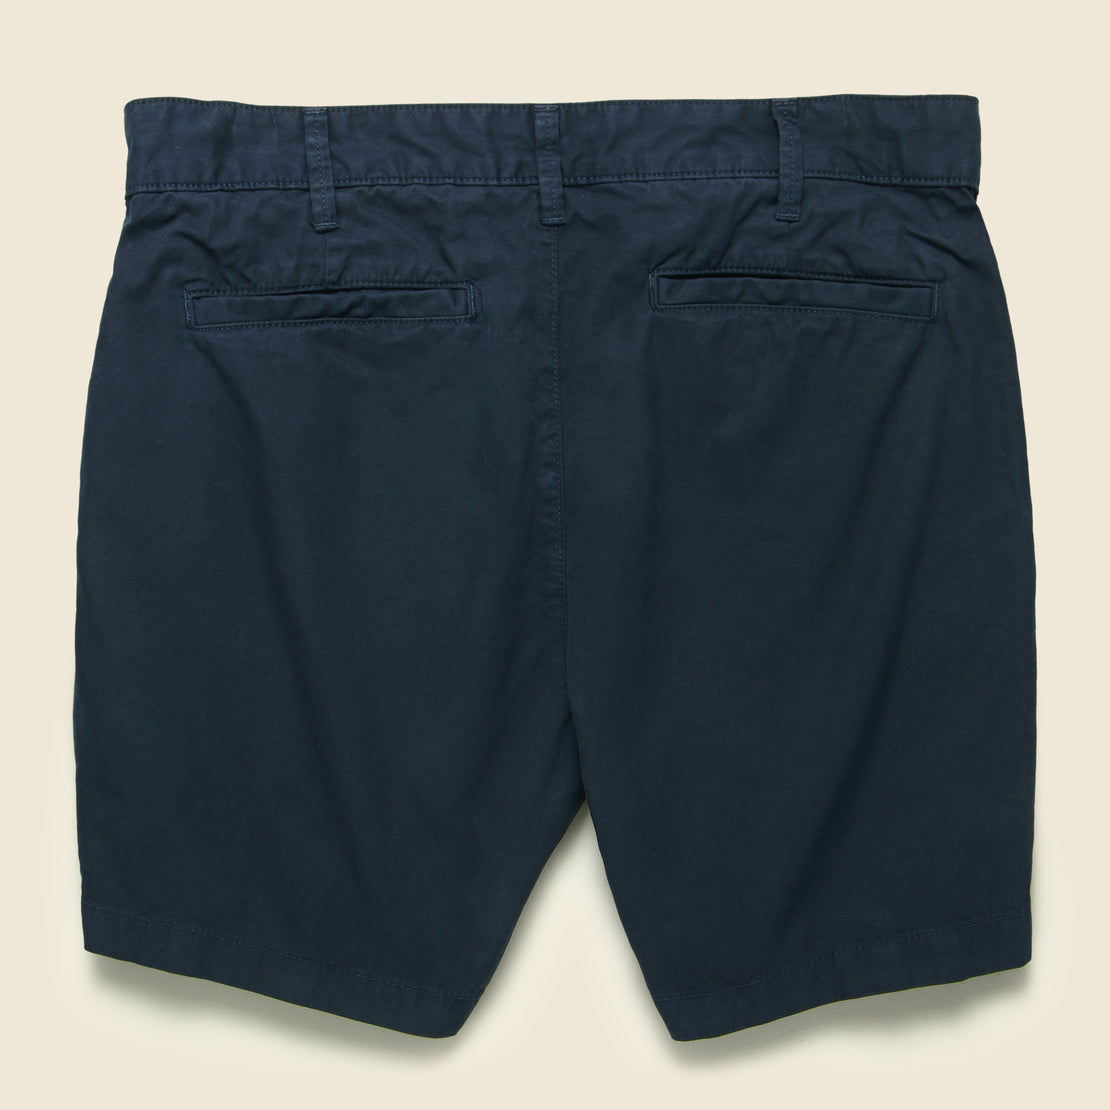 6" Bermuda Short - Navy - Save Khaki - STAG Provisions - Shorts - Solid